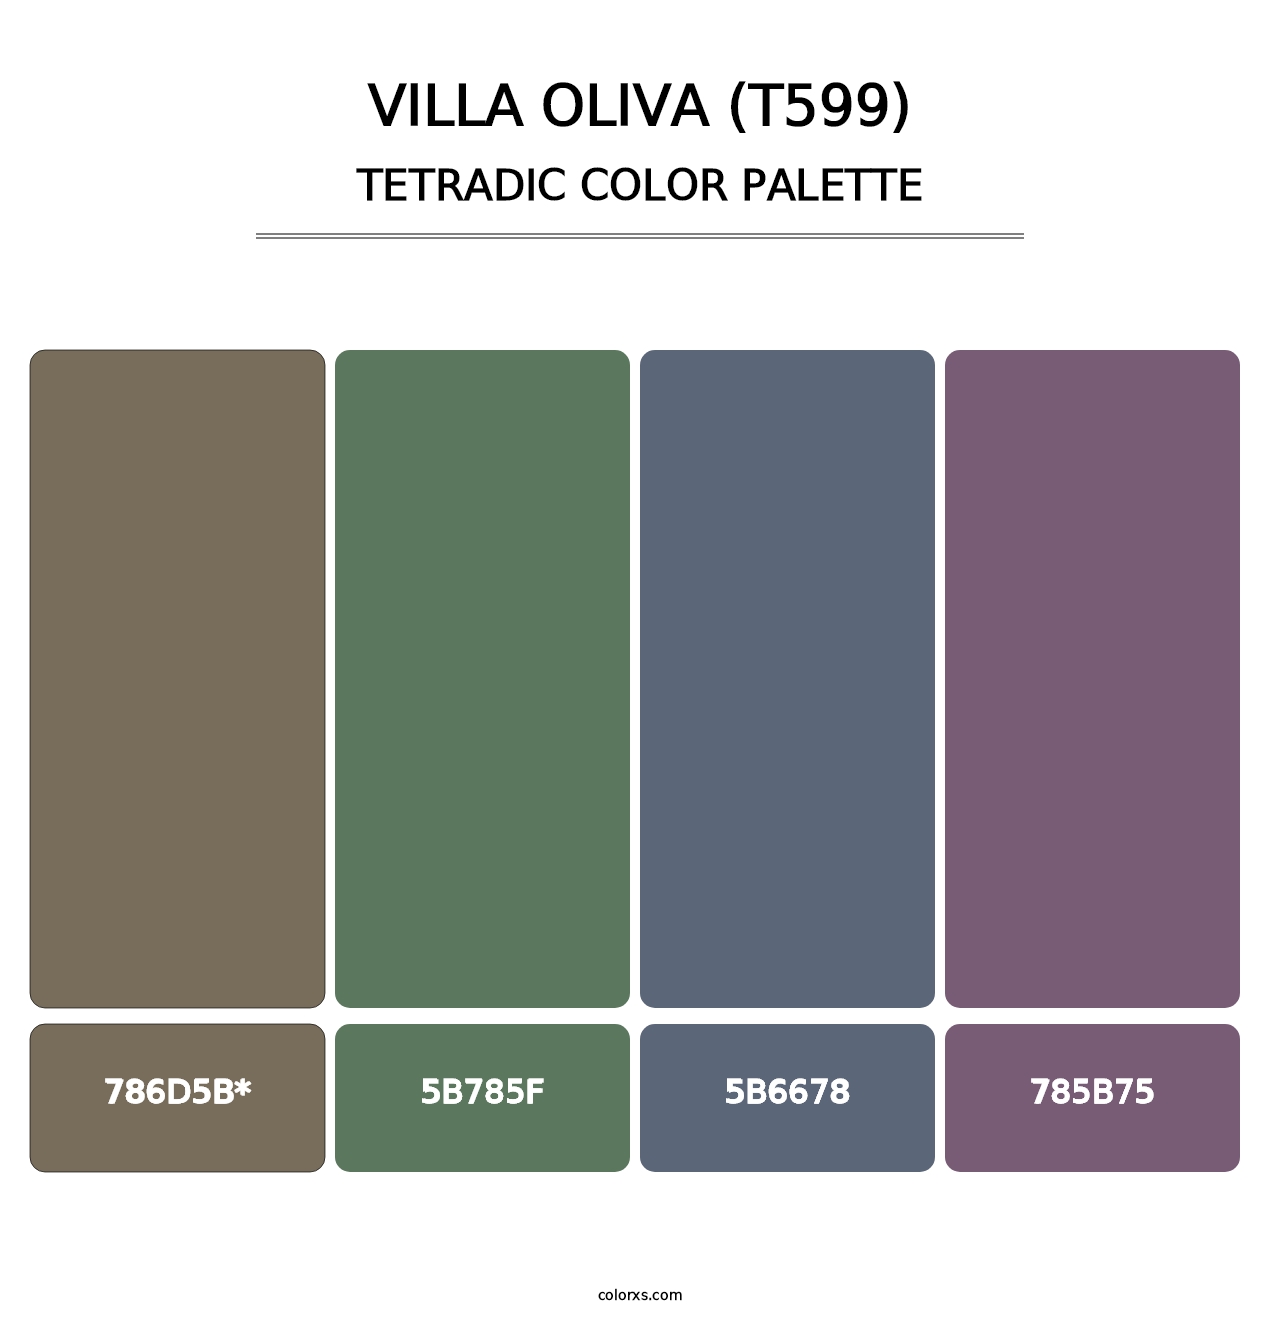 Villa Oliva (T599) - Tetradic Color Palette